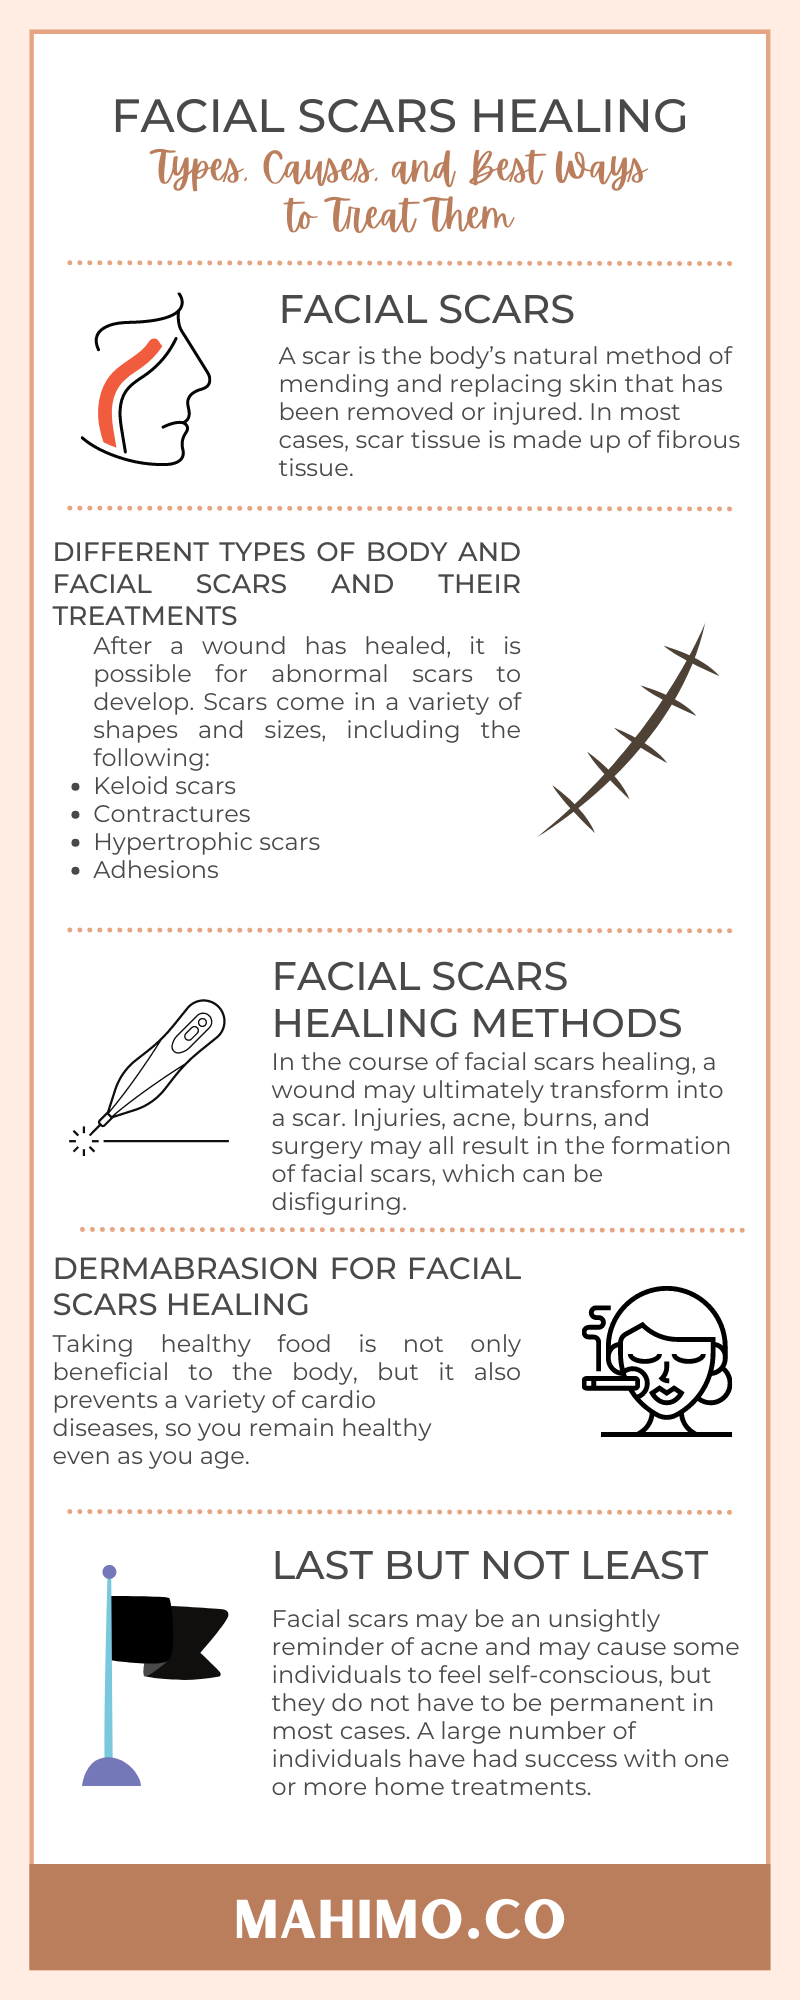 Facial scars healing